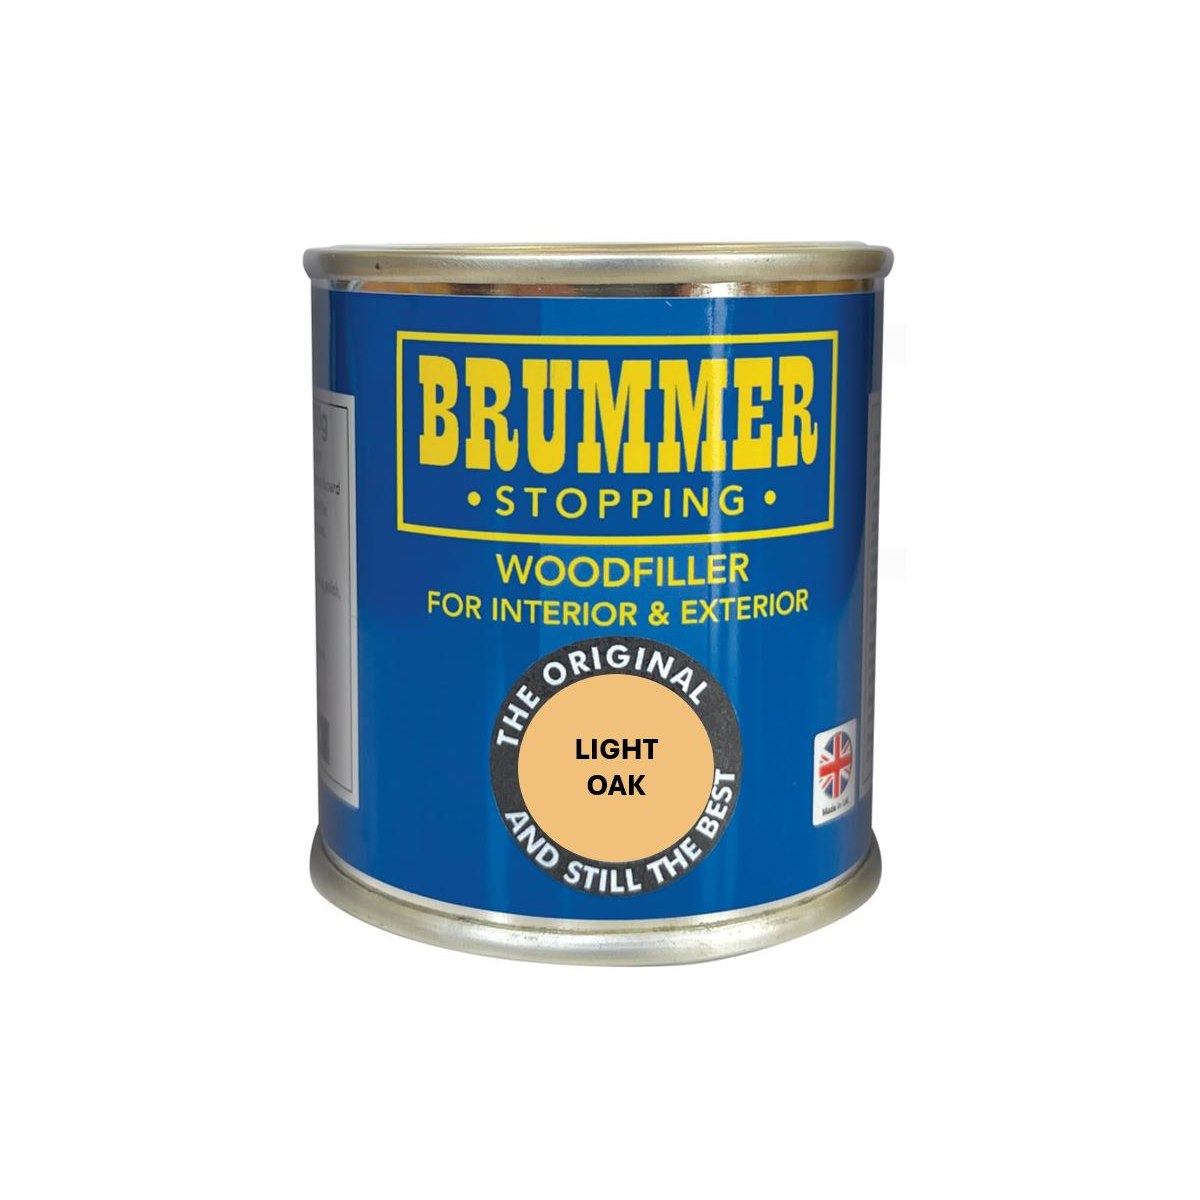 Brummer Woodfiller for Interior and Exteior Use Light Oak 700g